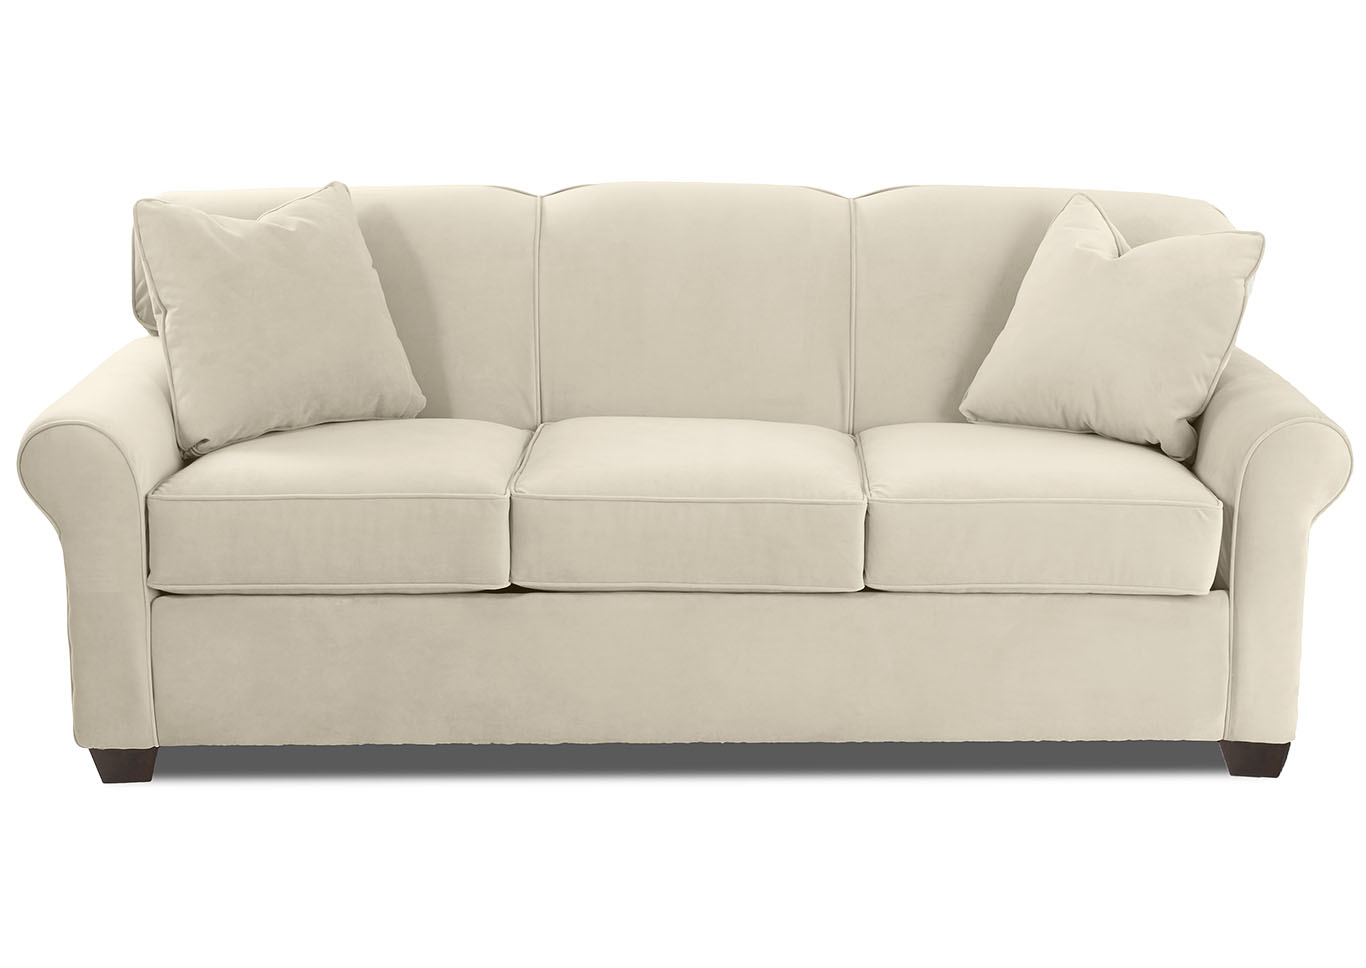 Mayhew  Off-White Sleeper Fabric Sofa,Klaussner Home Furnishings